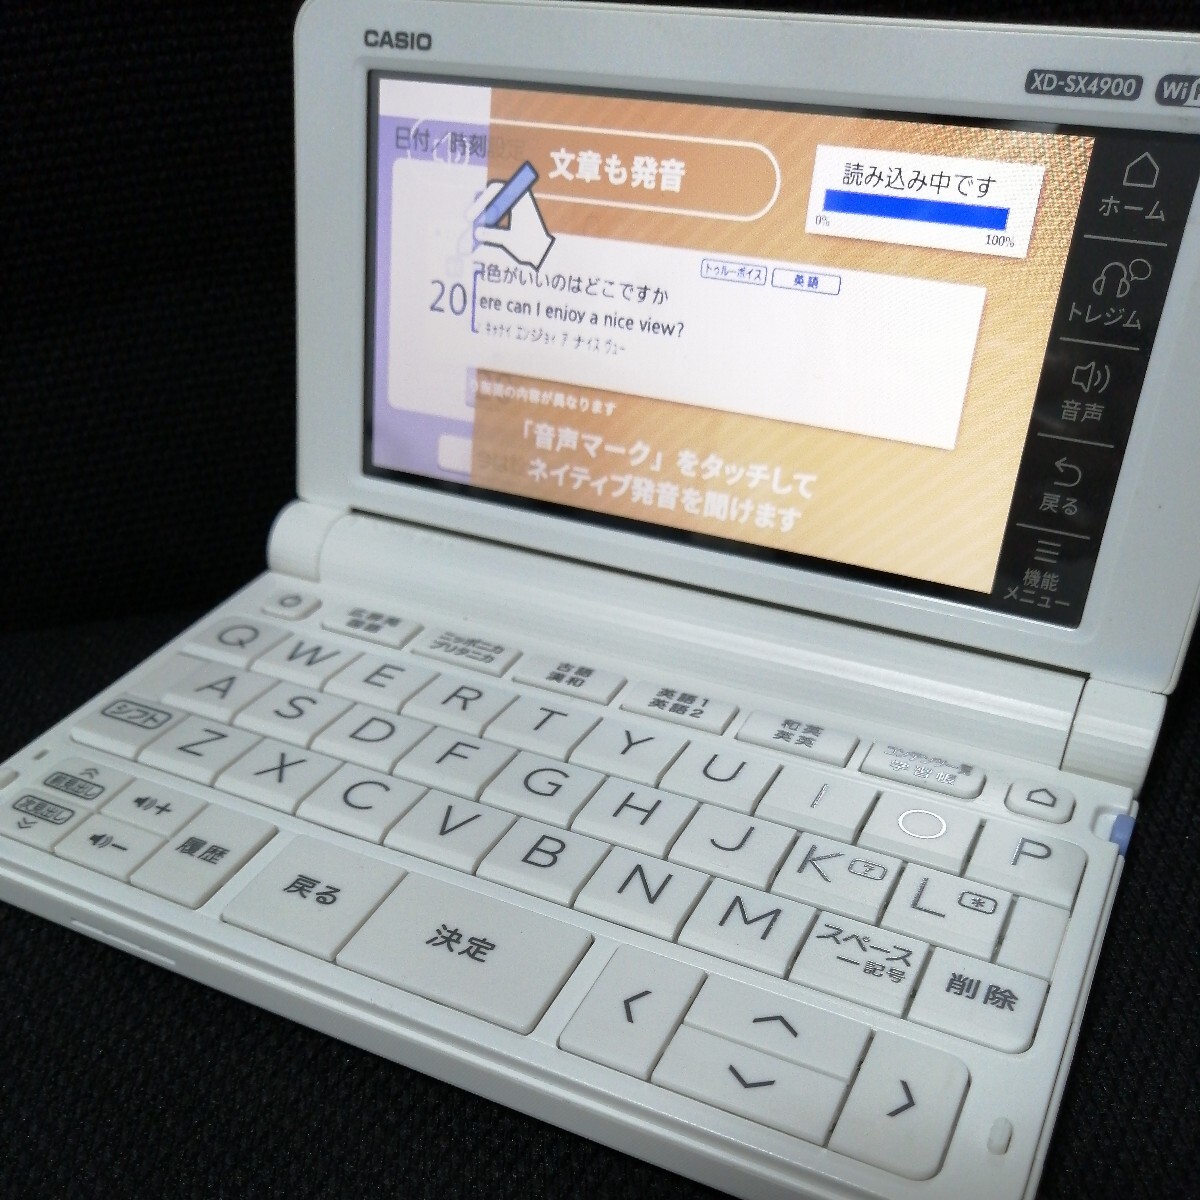 CASIO 電子辞書 XD-SX4900 WiFi 高校生モデルの画像3